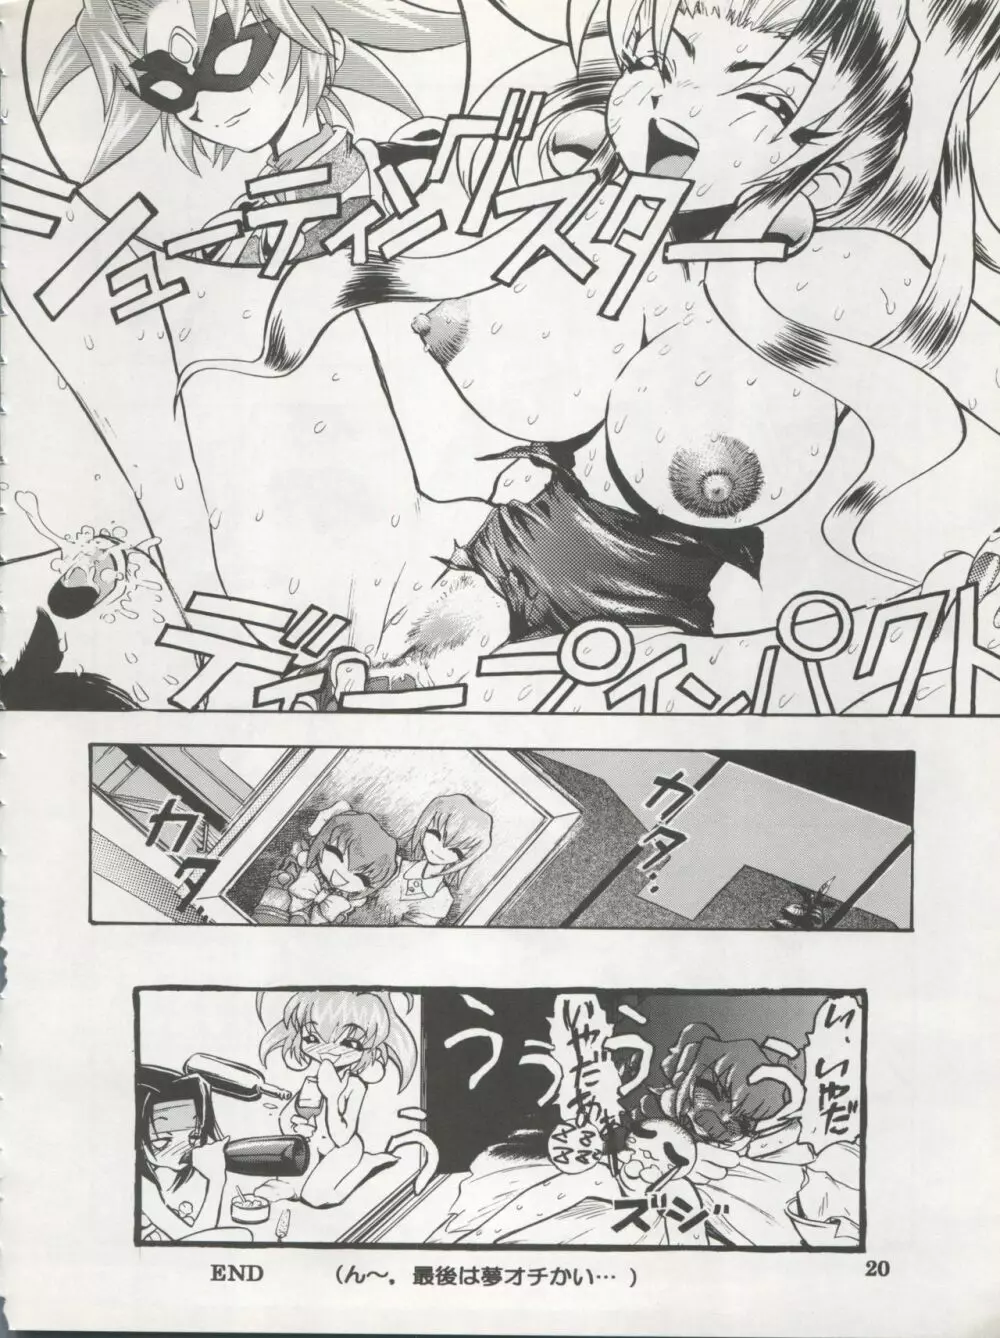 1998 SUMMER 電撃犬王 - page22